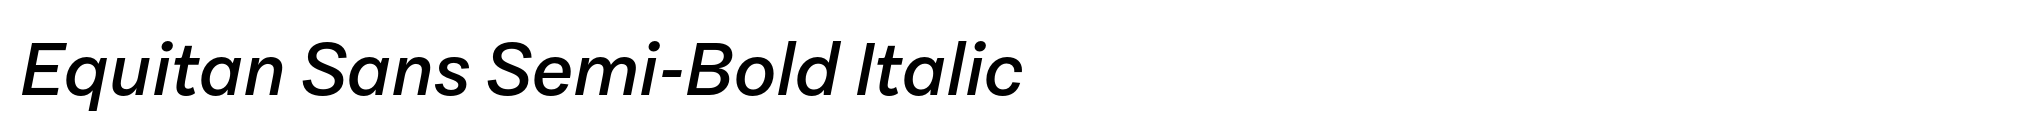 Equitan Sans Semi-Bold Italic image